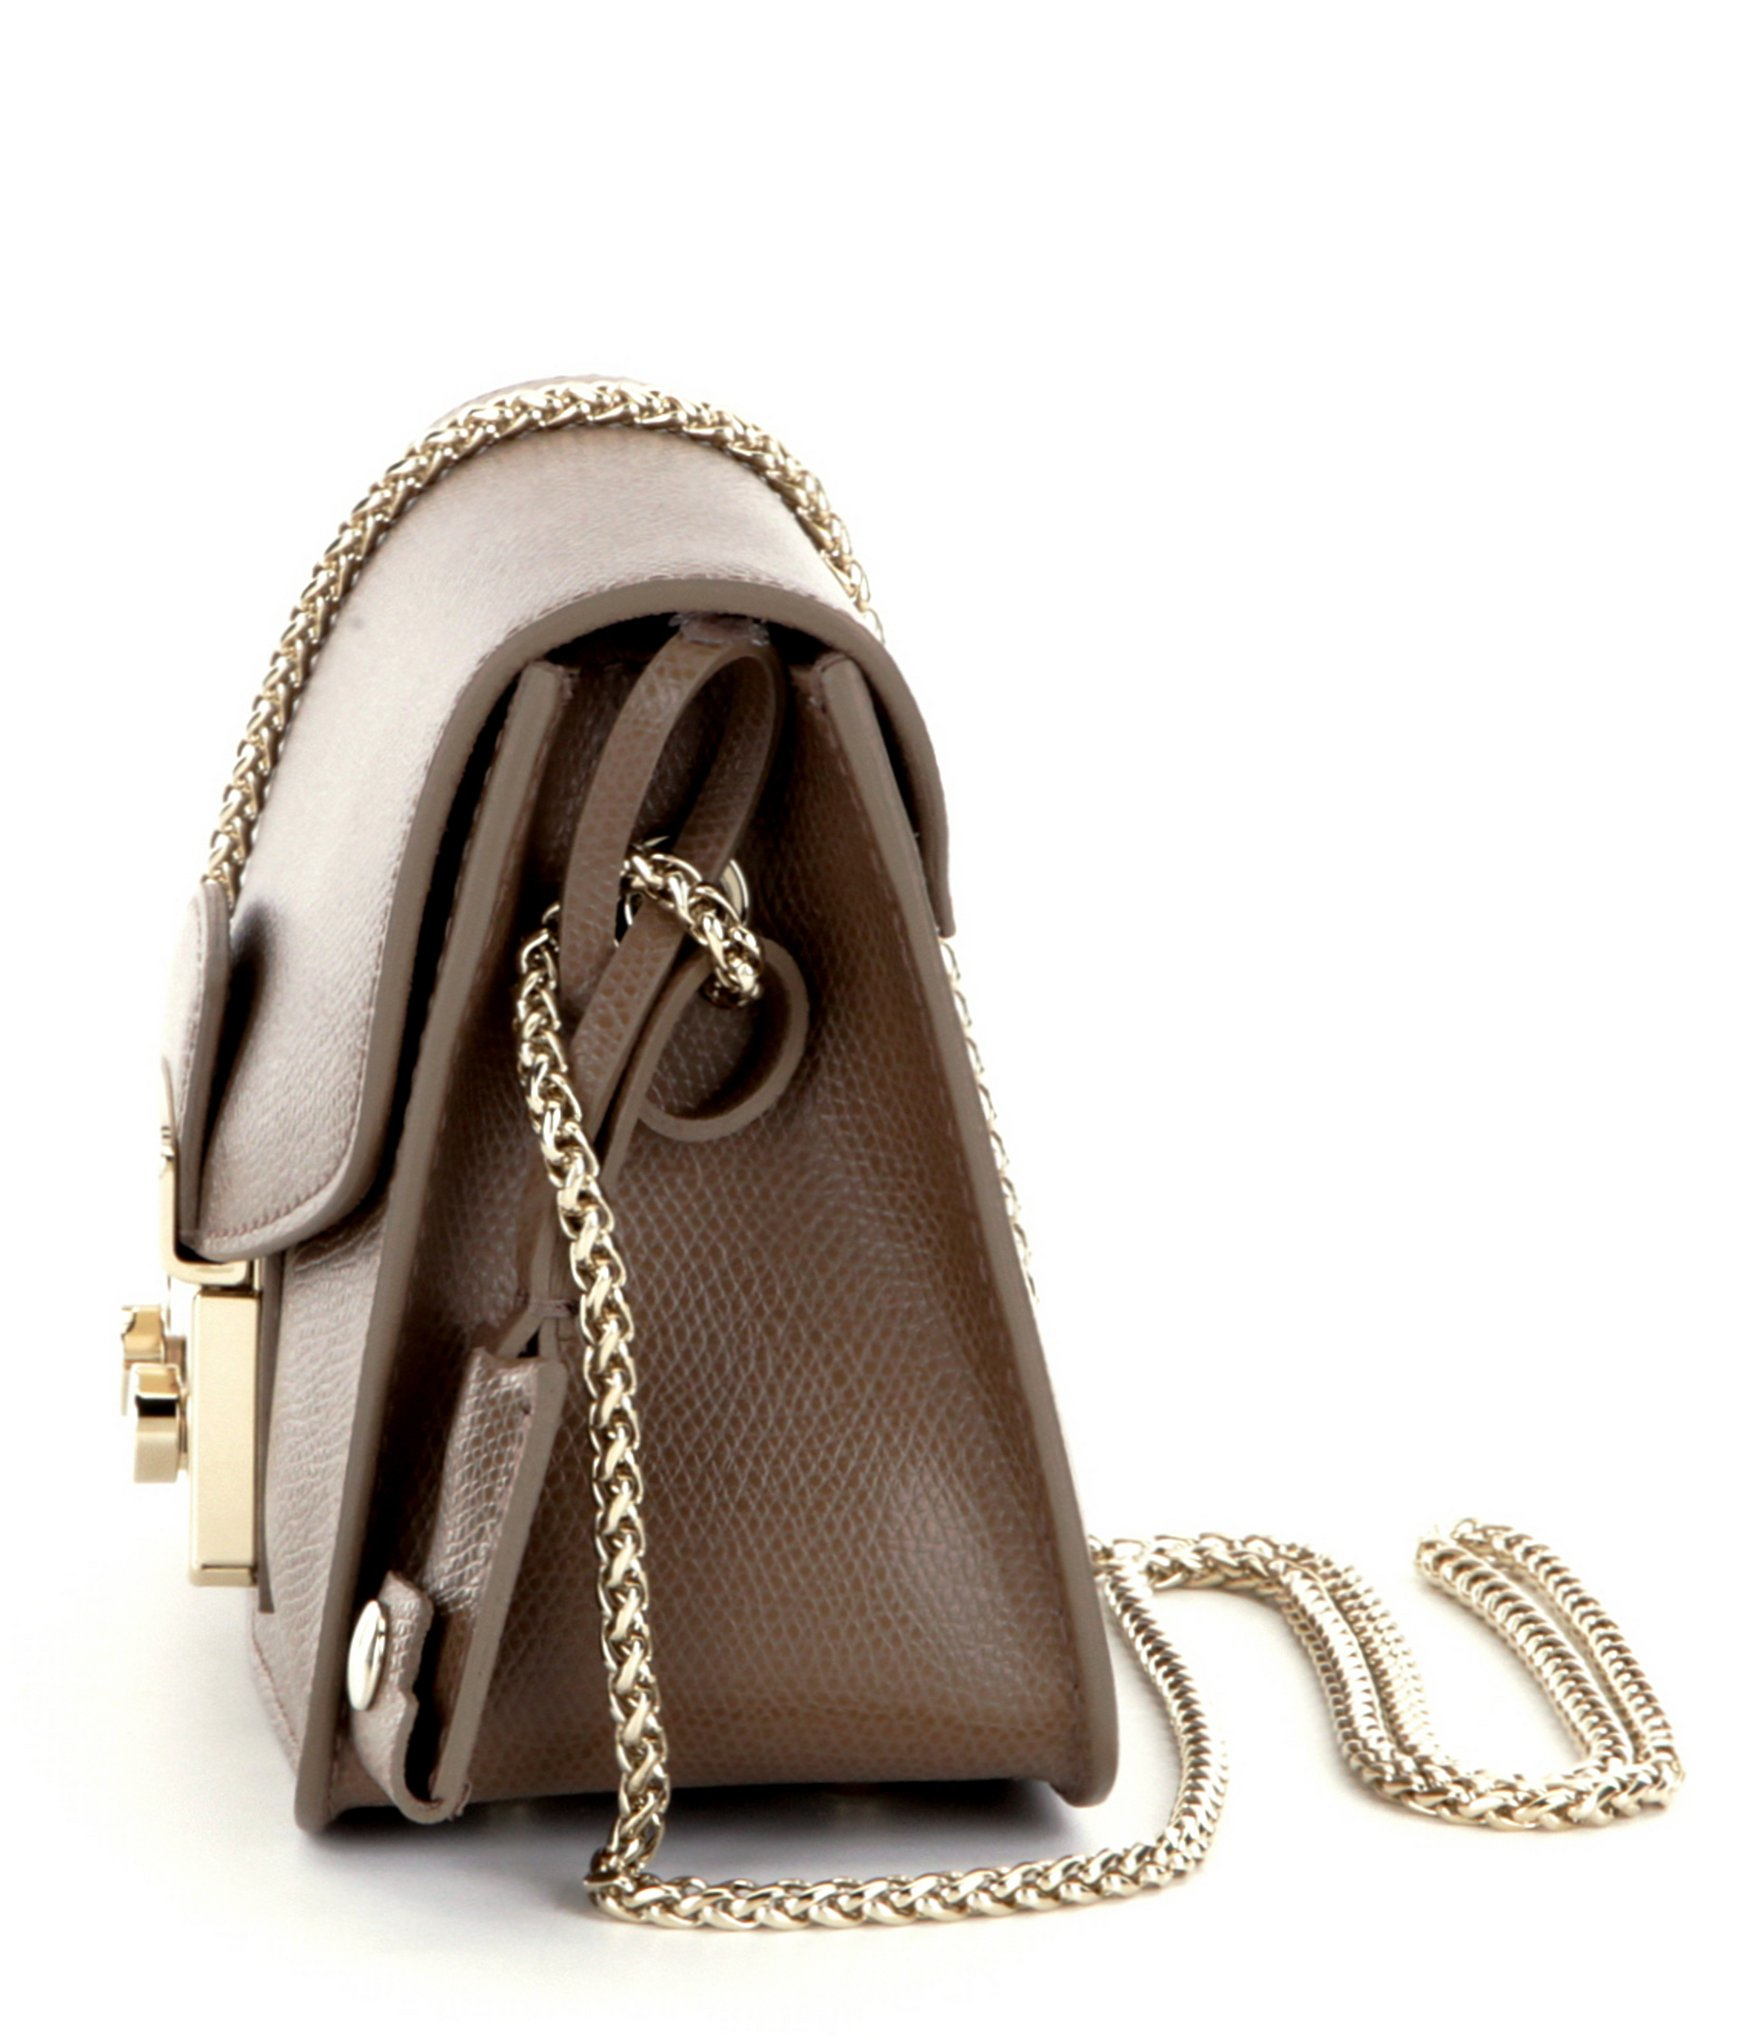 Furla Metropolis Mini Chain Strap Cross-body Bag in Brown - Lyst